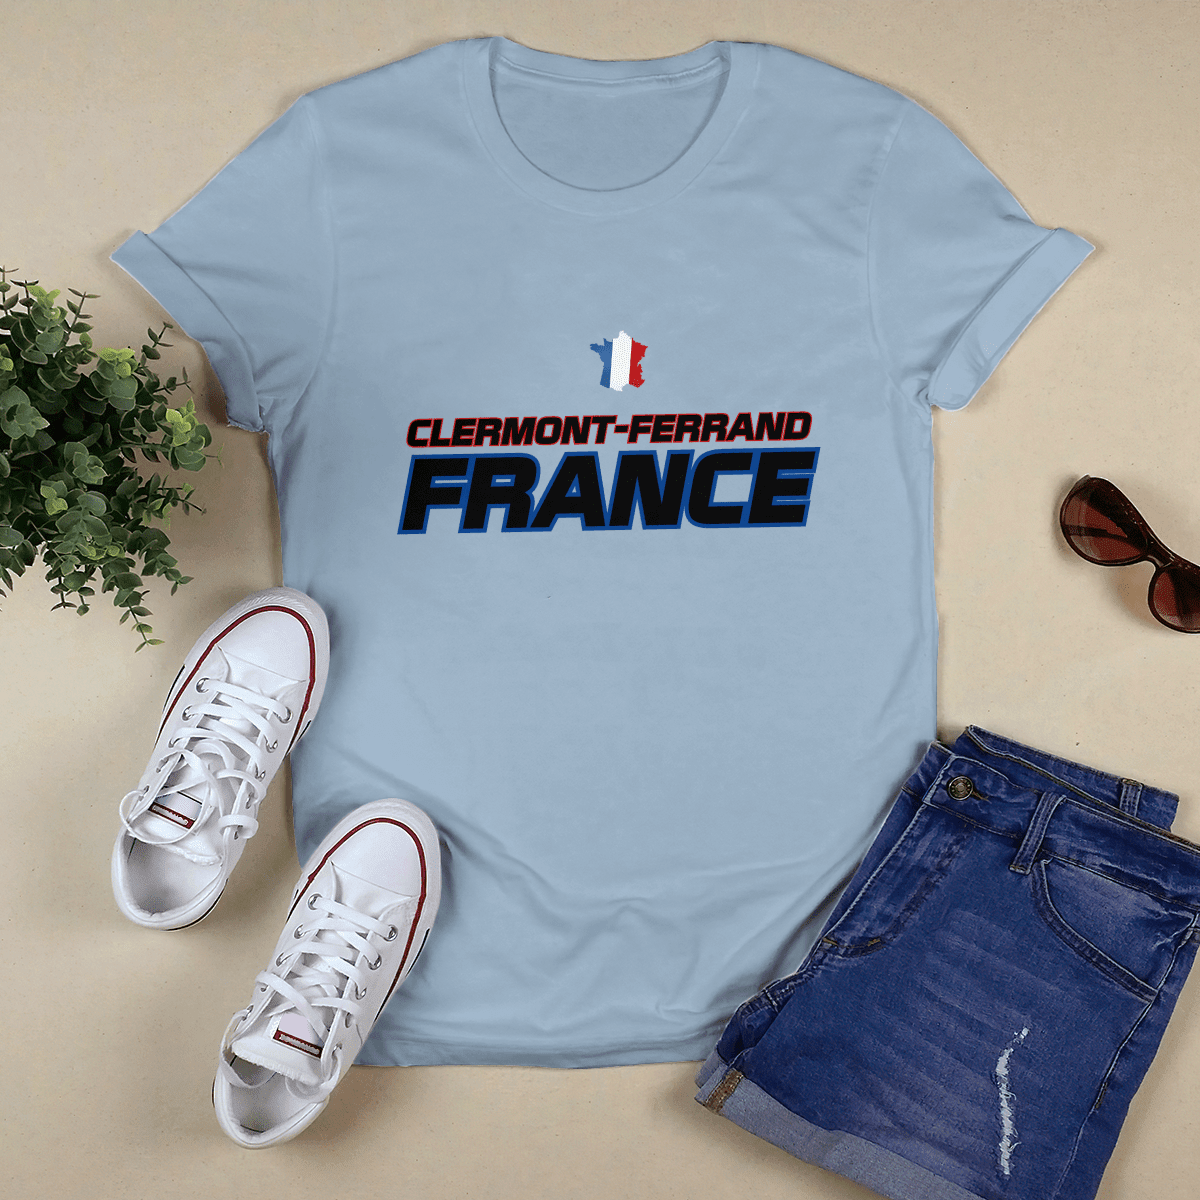 CLERMONT-FERRAND France Shirt